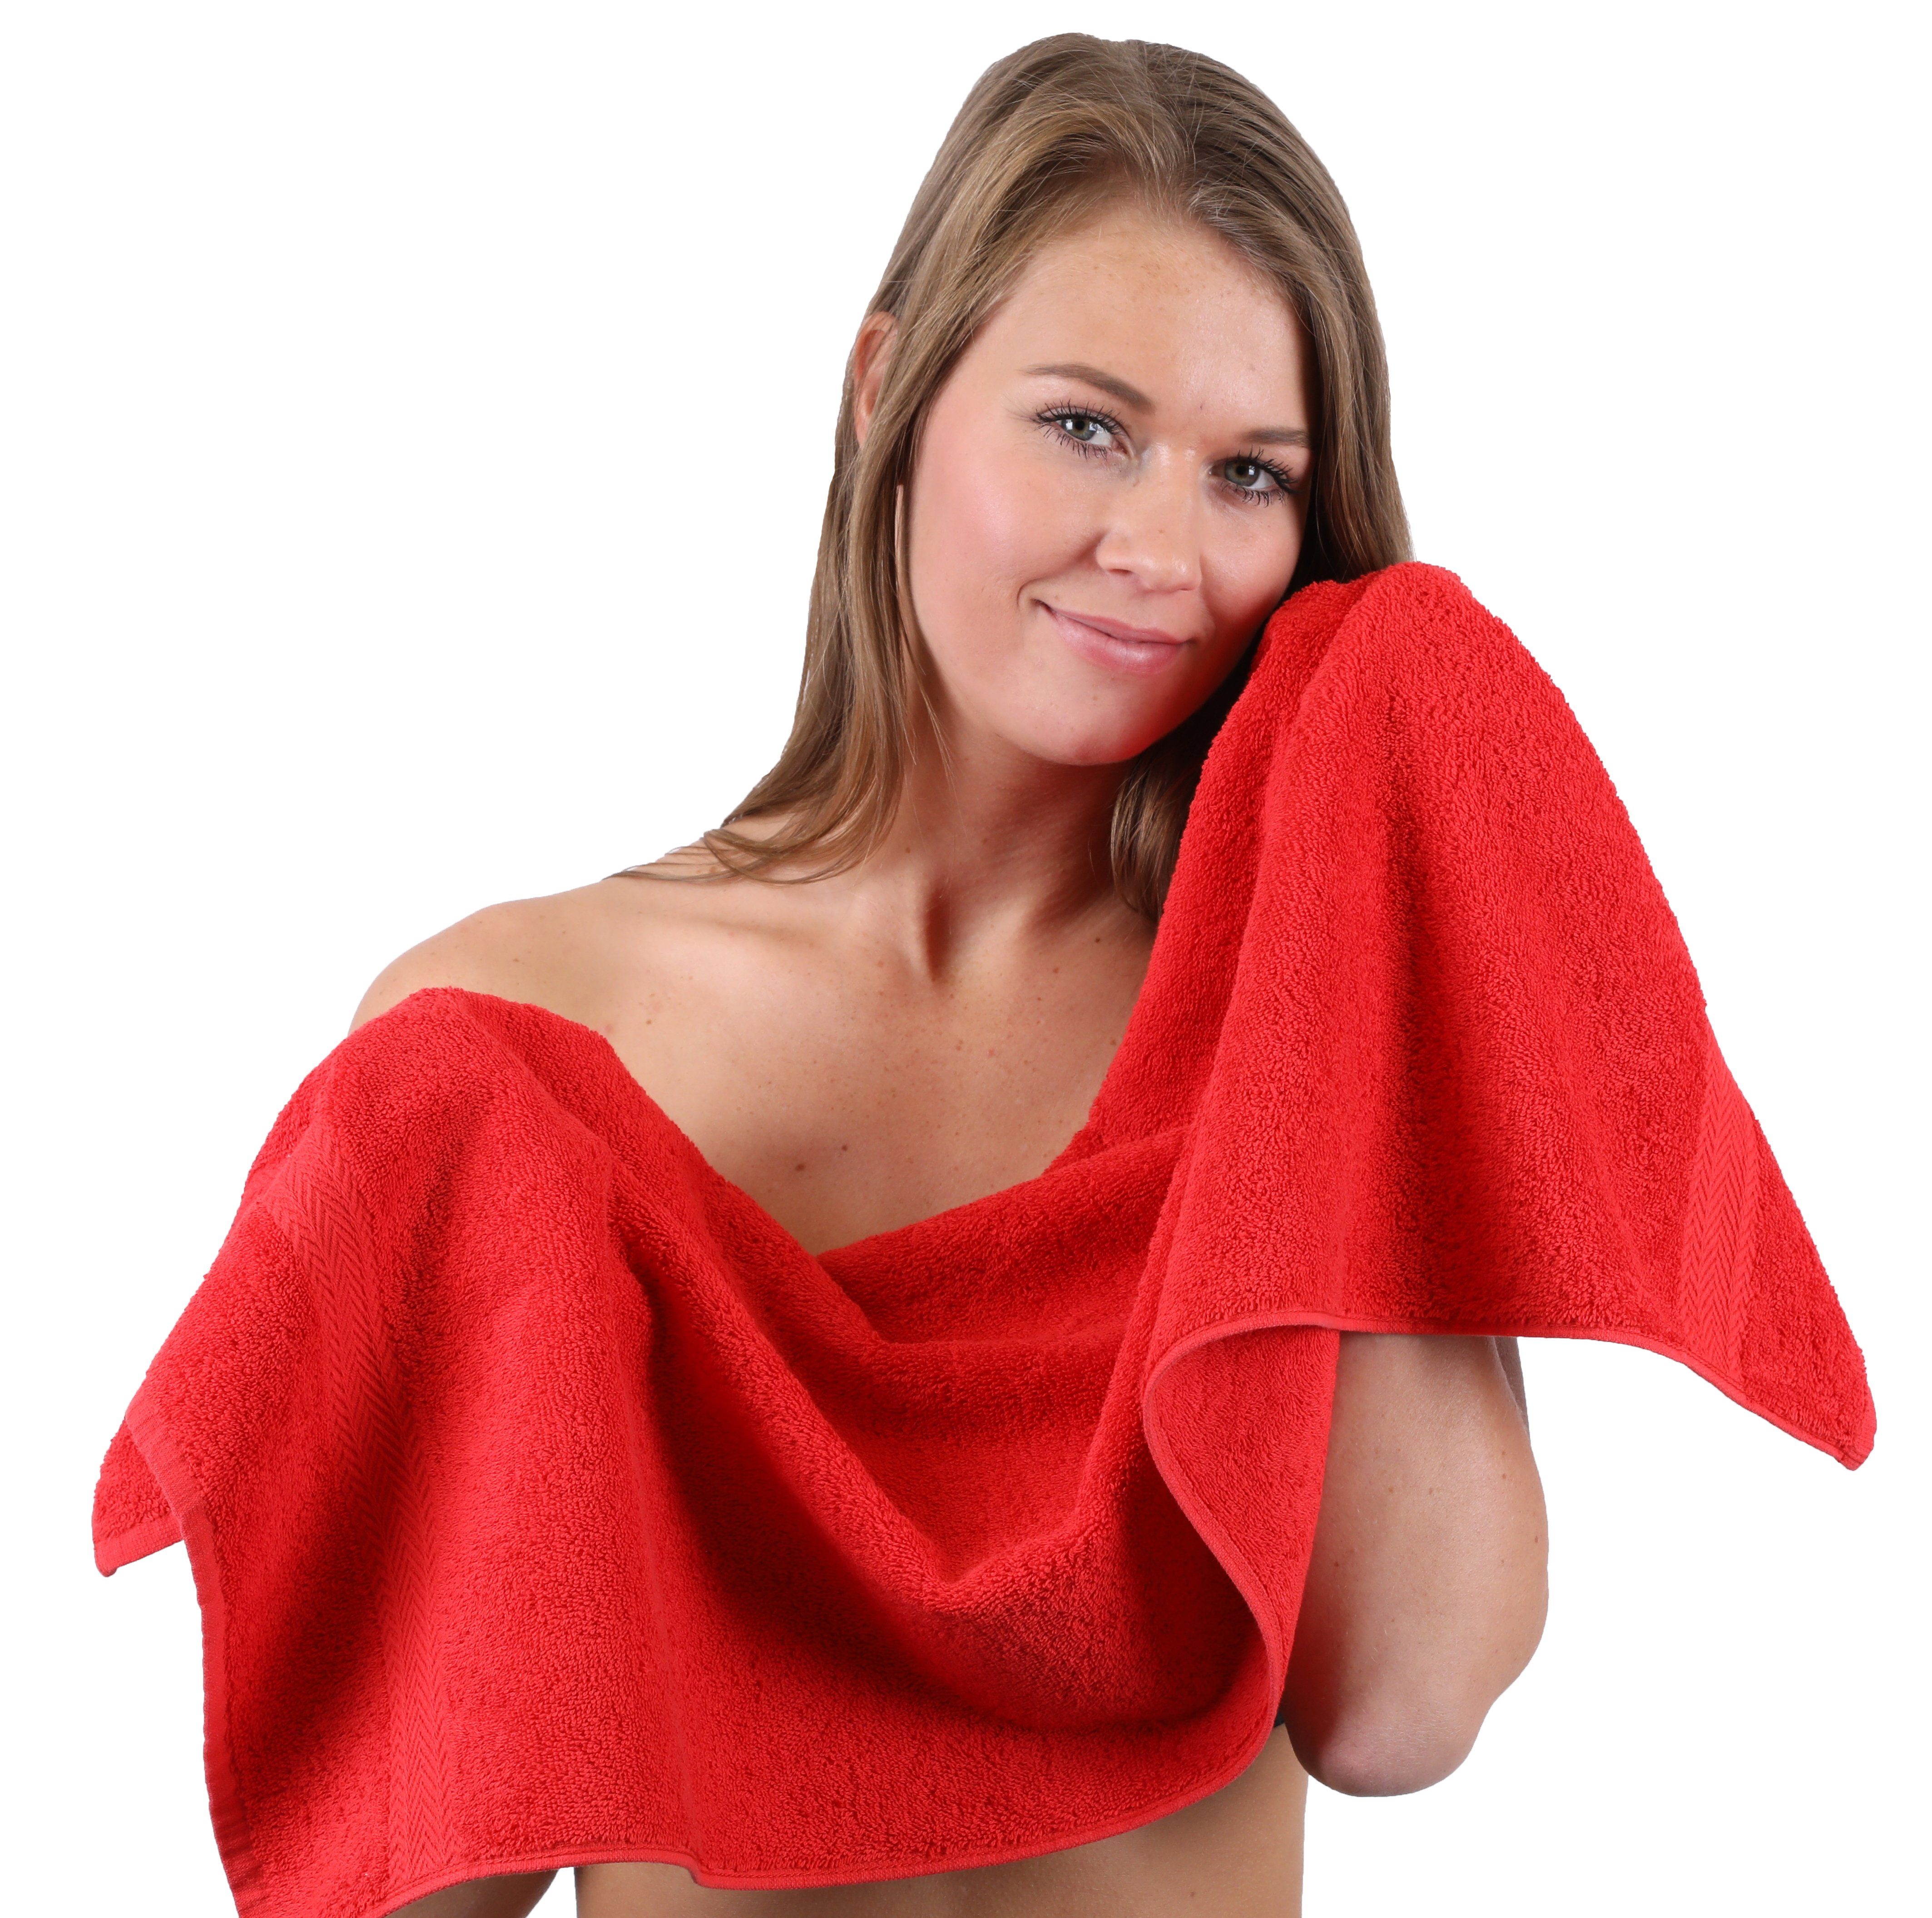 Betz Handtuch Set 10-TLG. Handtuch-Set (10-tlg) Premium & 100% Rot Silbergrau, Baumwolle, Farbe